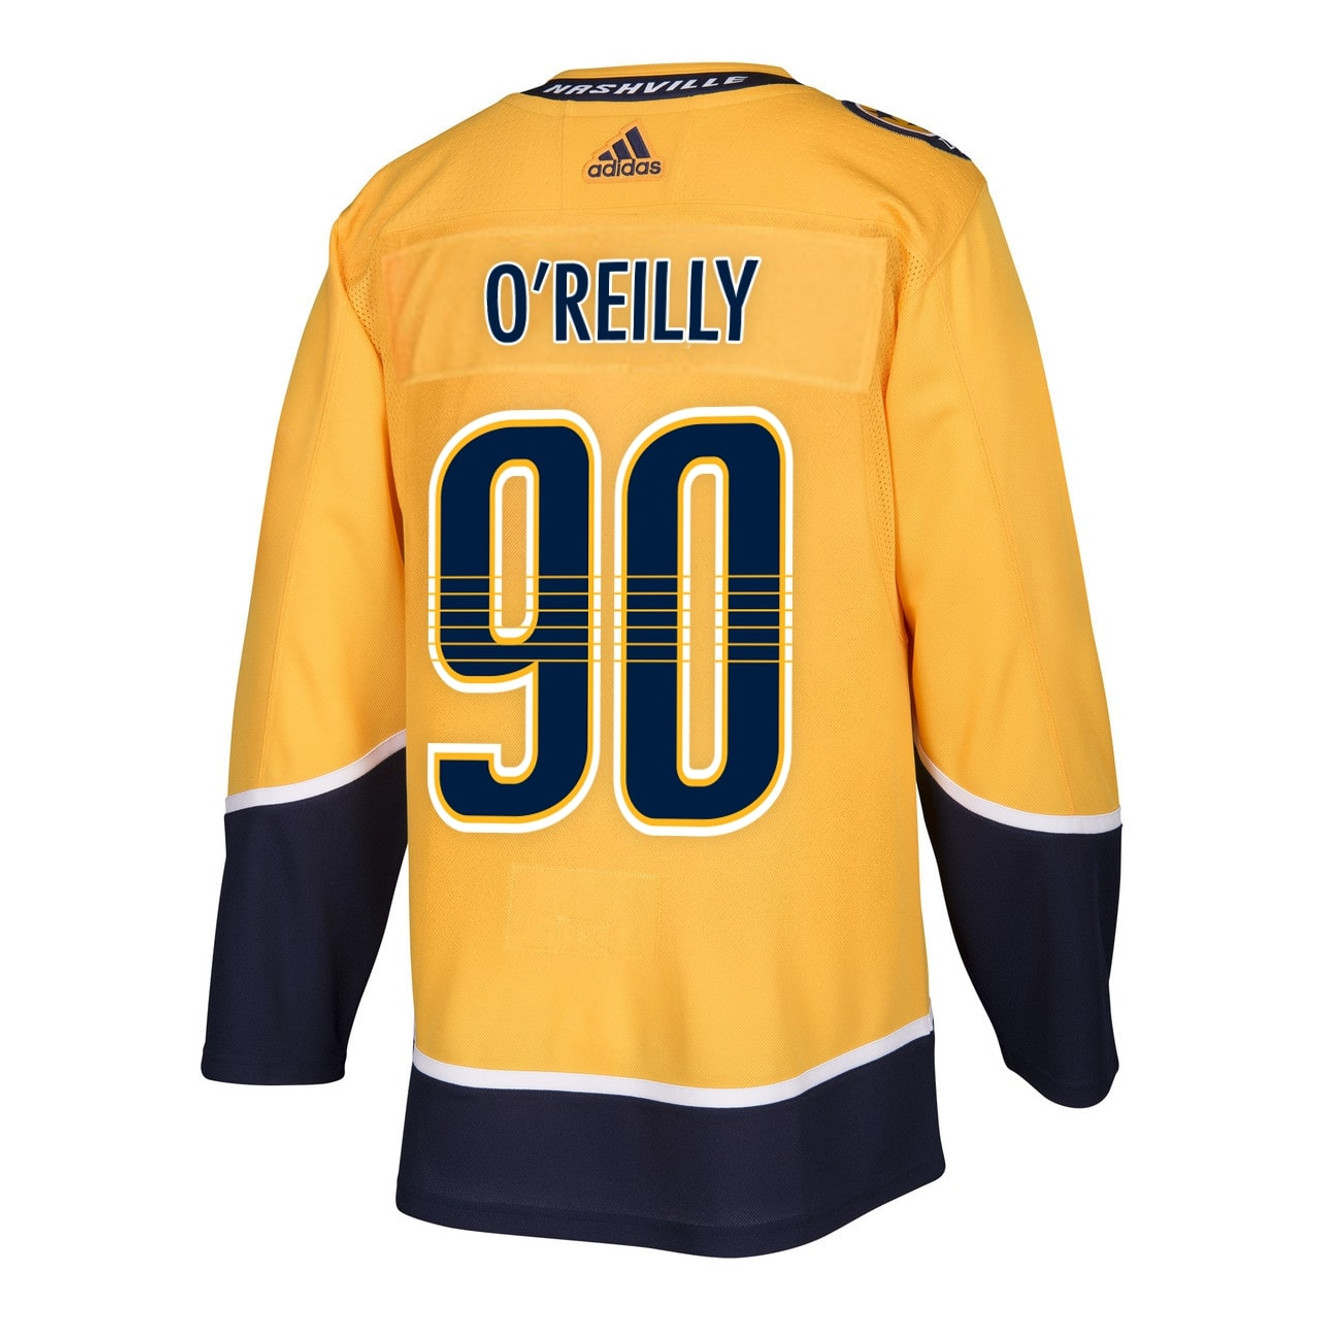 Nashville Predators Adidas Authentic Ryan O'Reilly Jersey Home/Gold